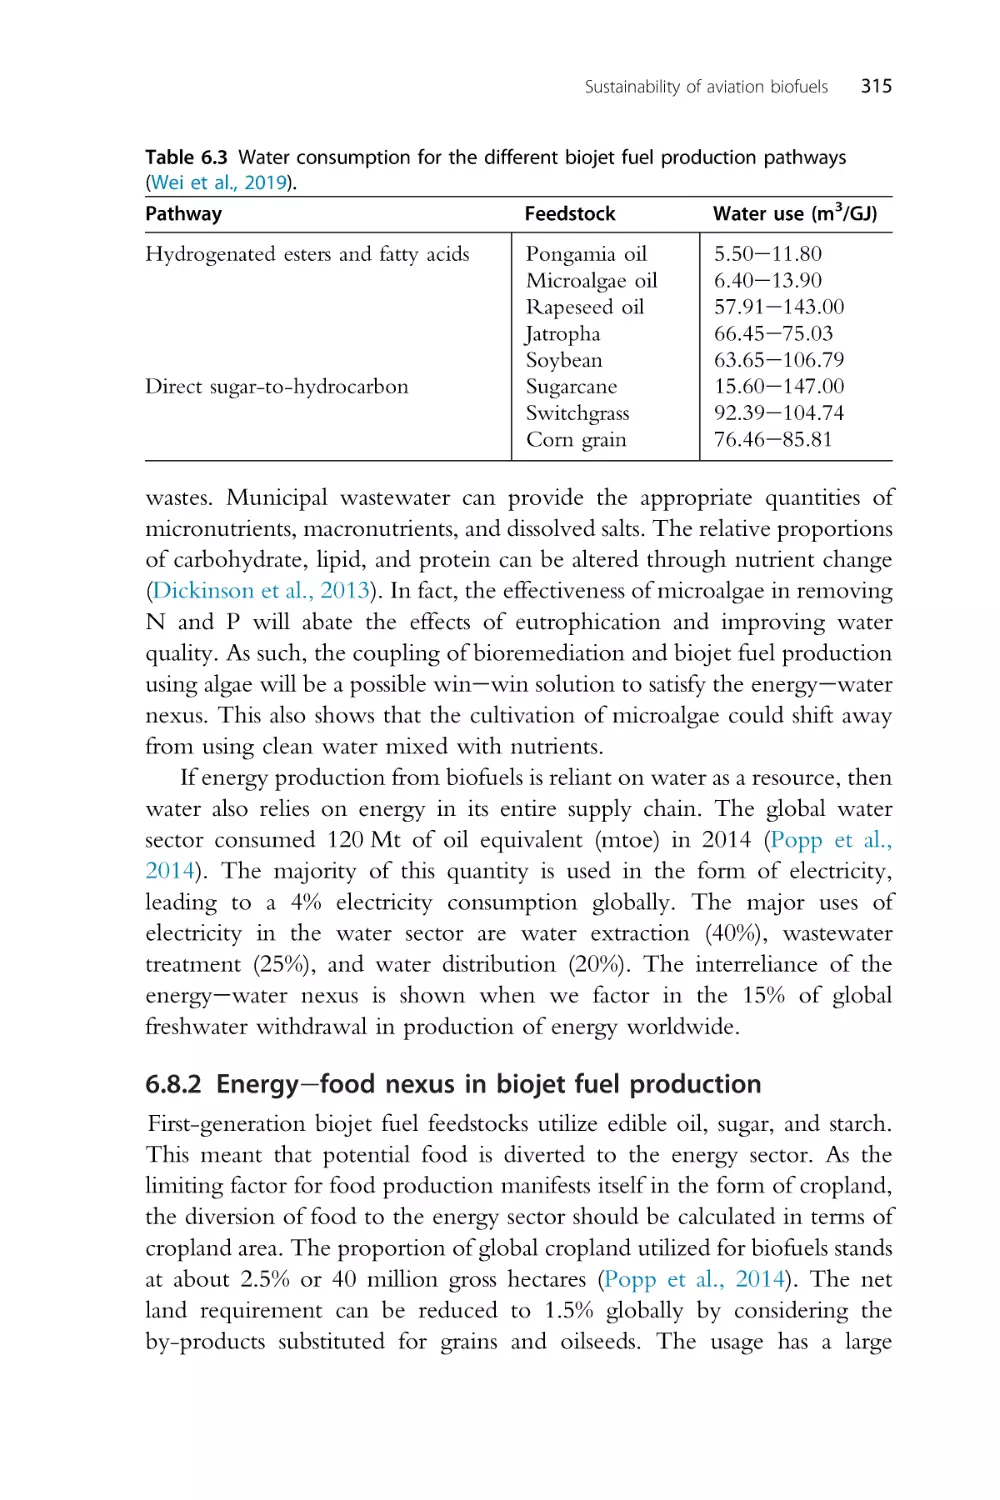 6.8.2 Energy–food nexus in biojet fuel production